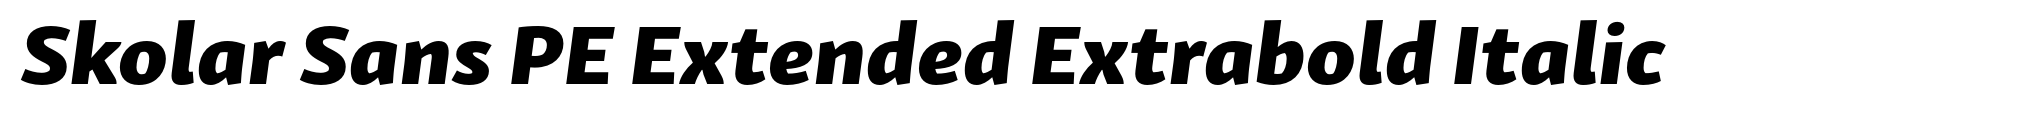 Skolar Sans PE Extended Extrabold Italic image